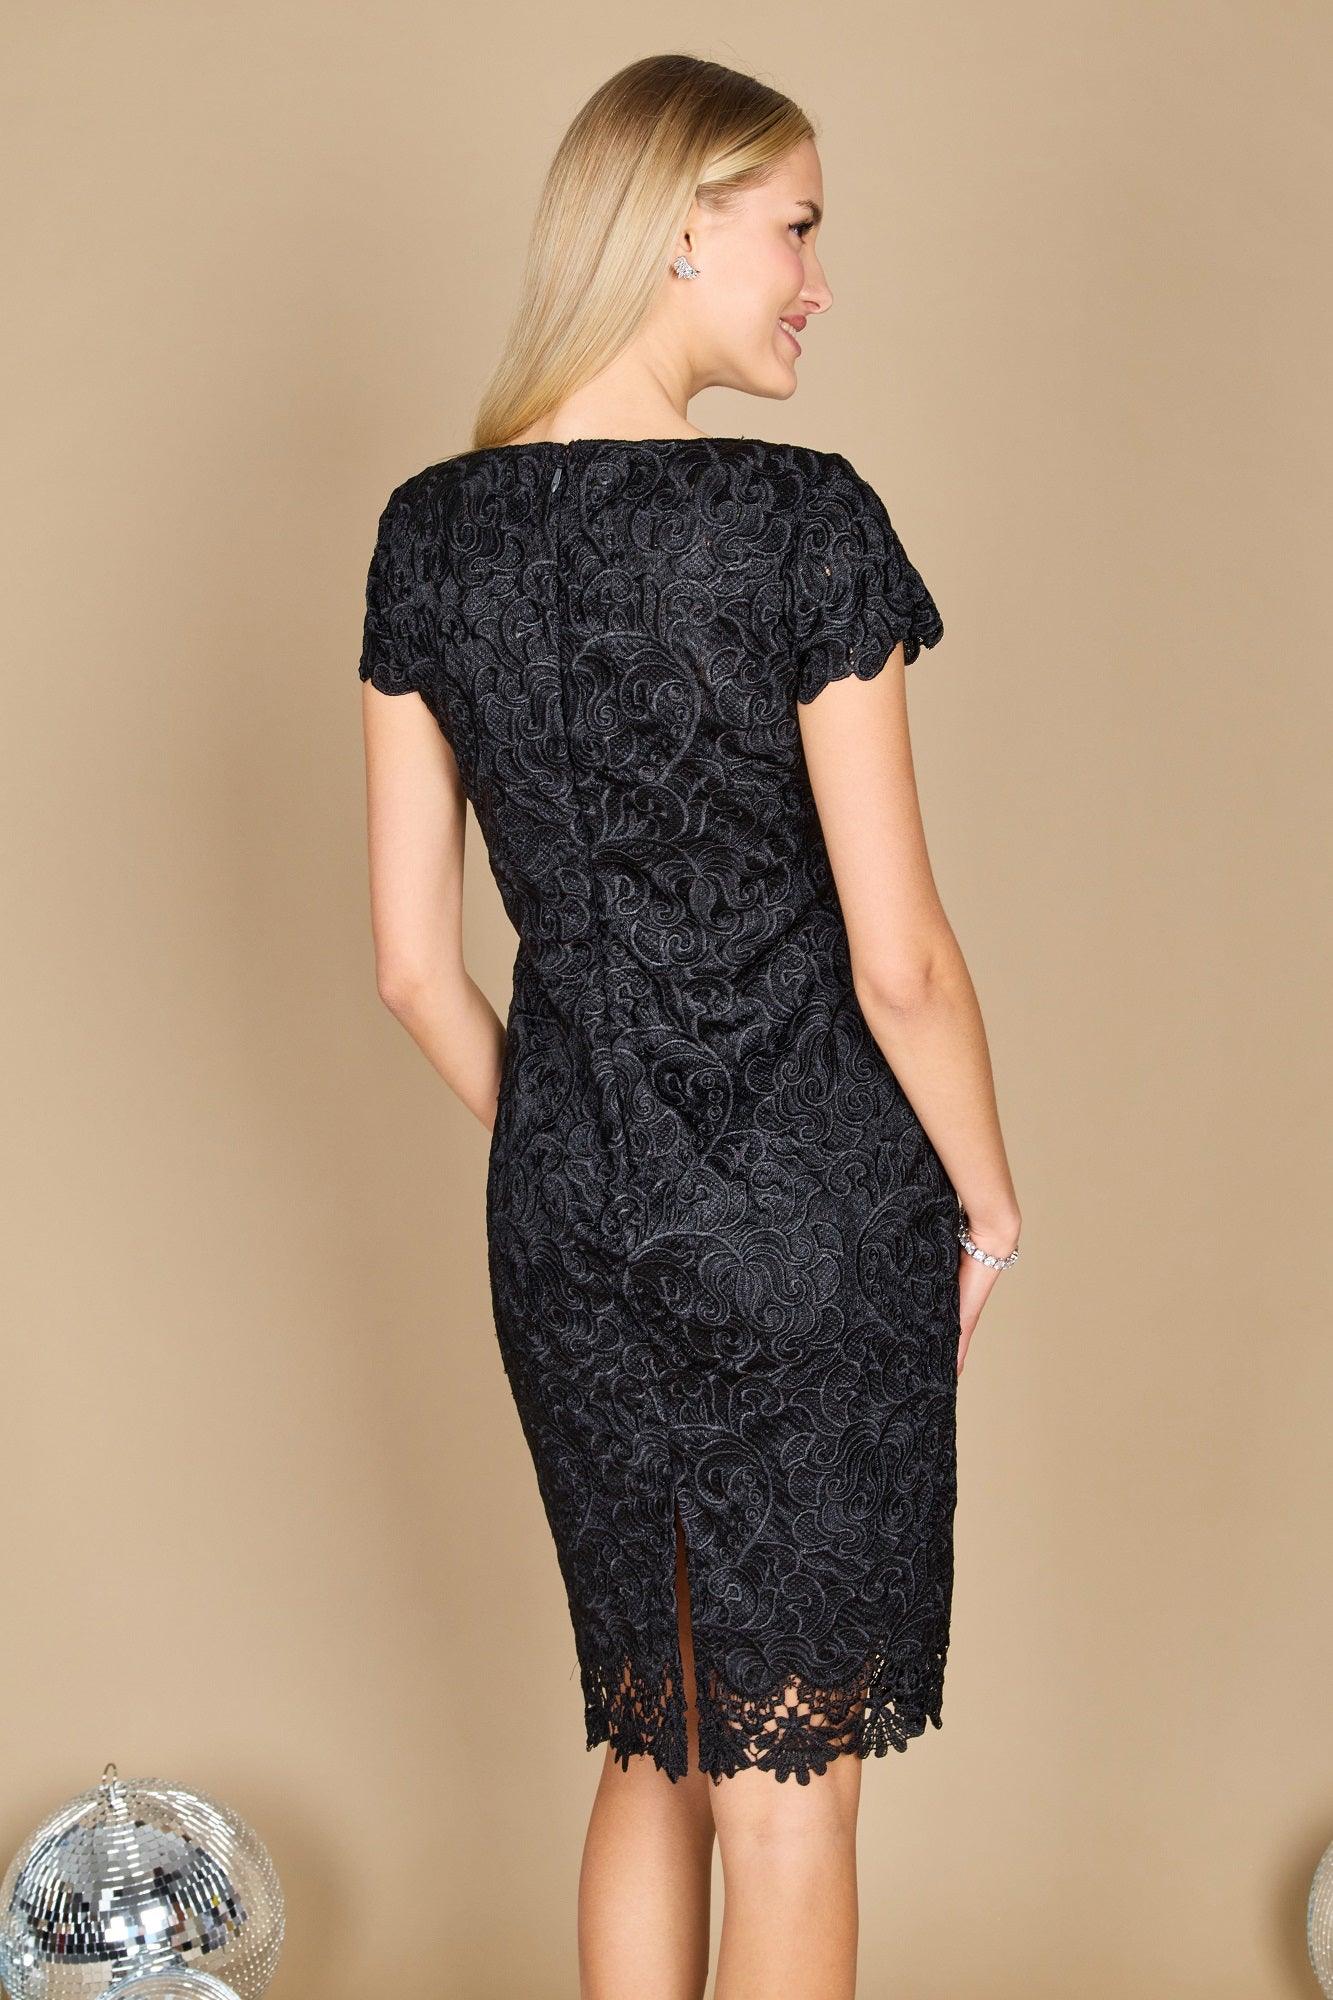 Short Lace Formal Evening Cocktail Dress Black